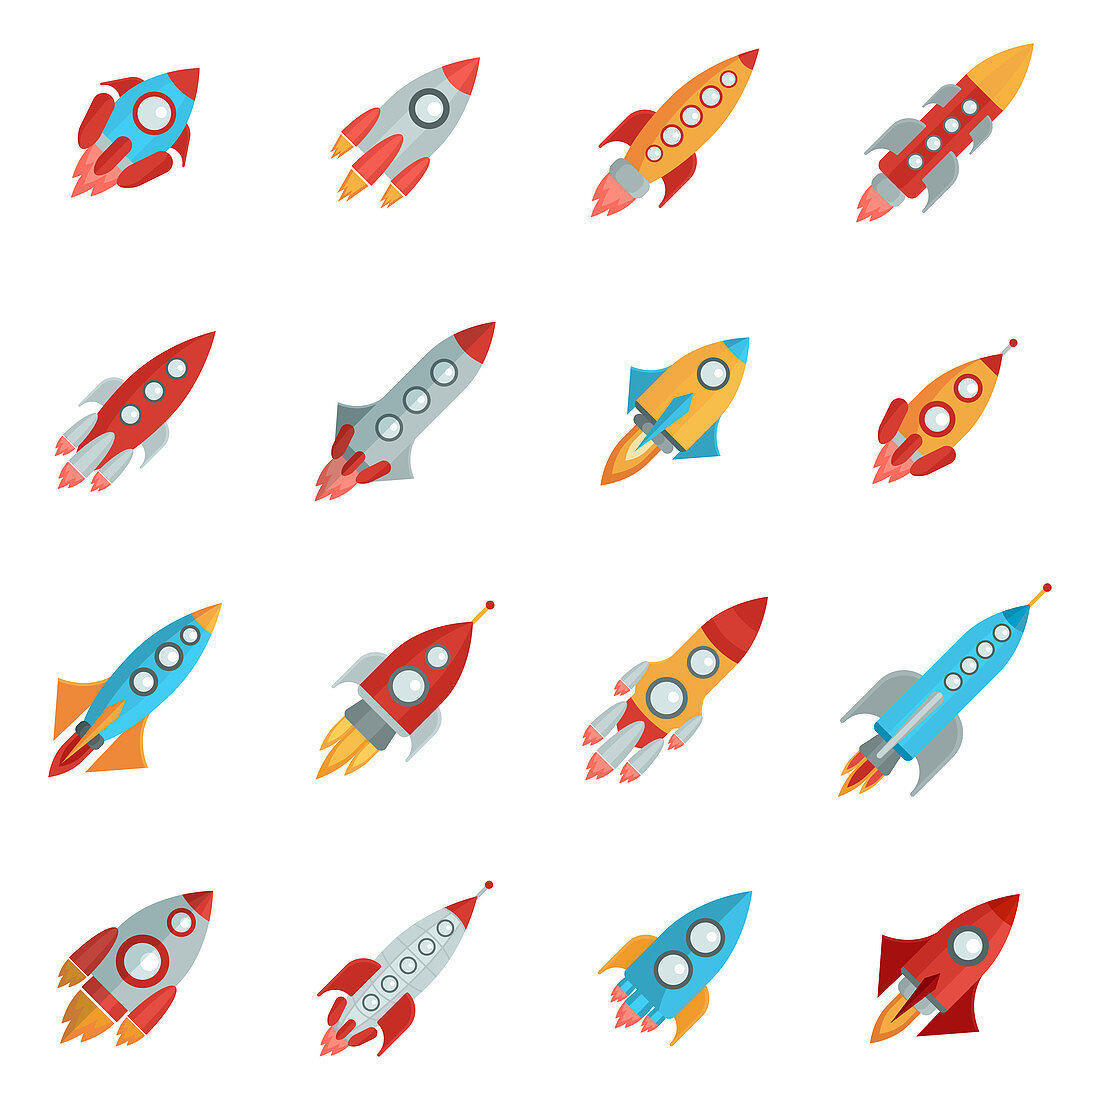 Rocket icons, illustration